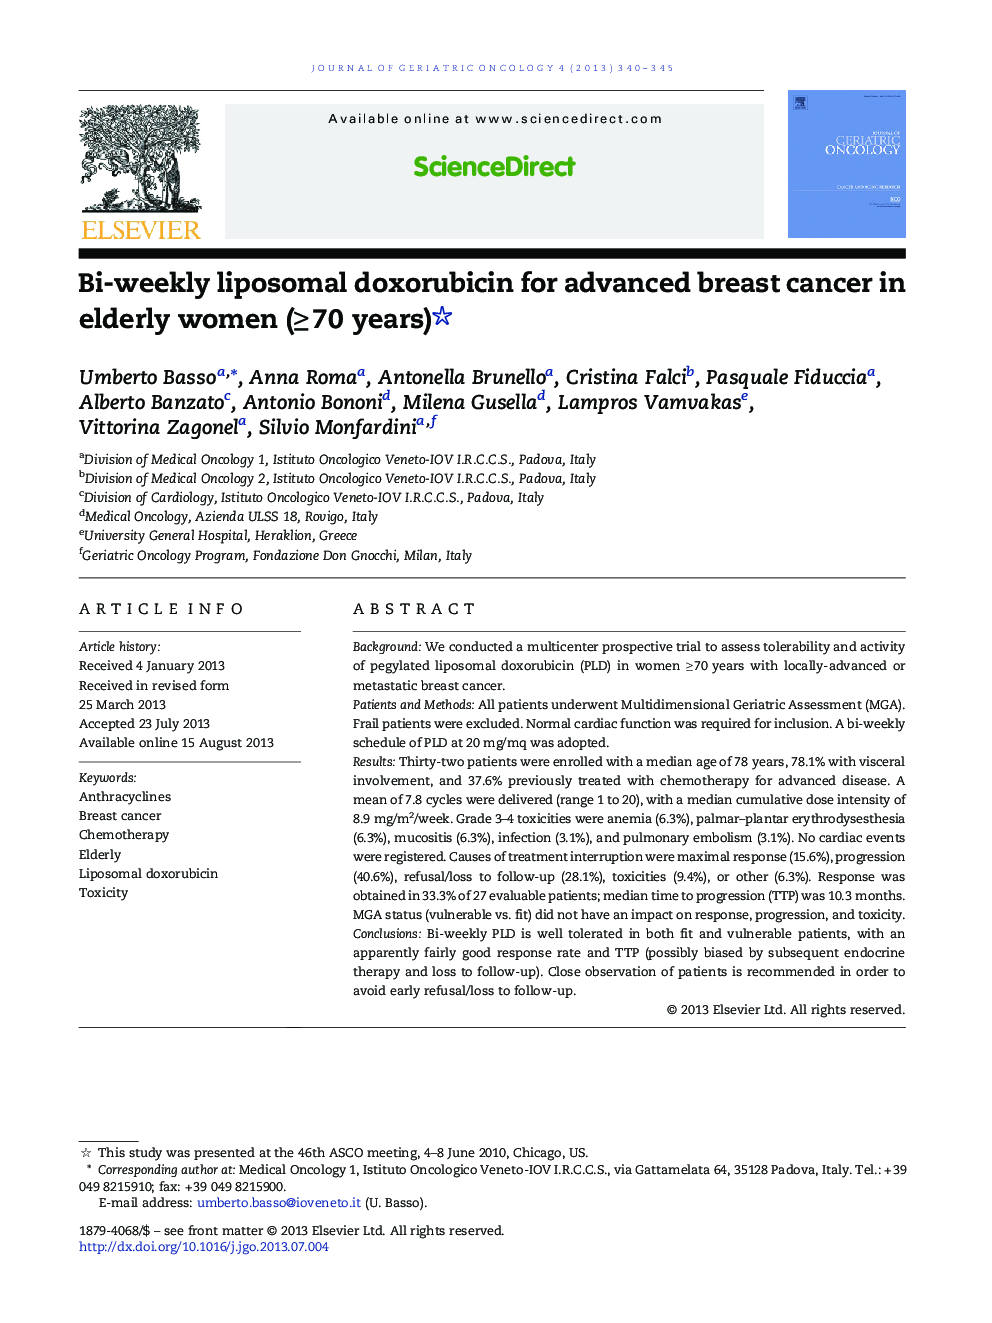 Bi-weekly liposomal doxorubicin for advanced breast cancer in elderly women (≥ 70 years) 